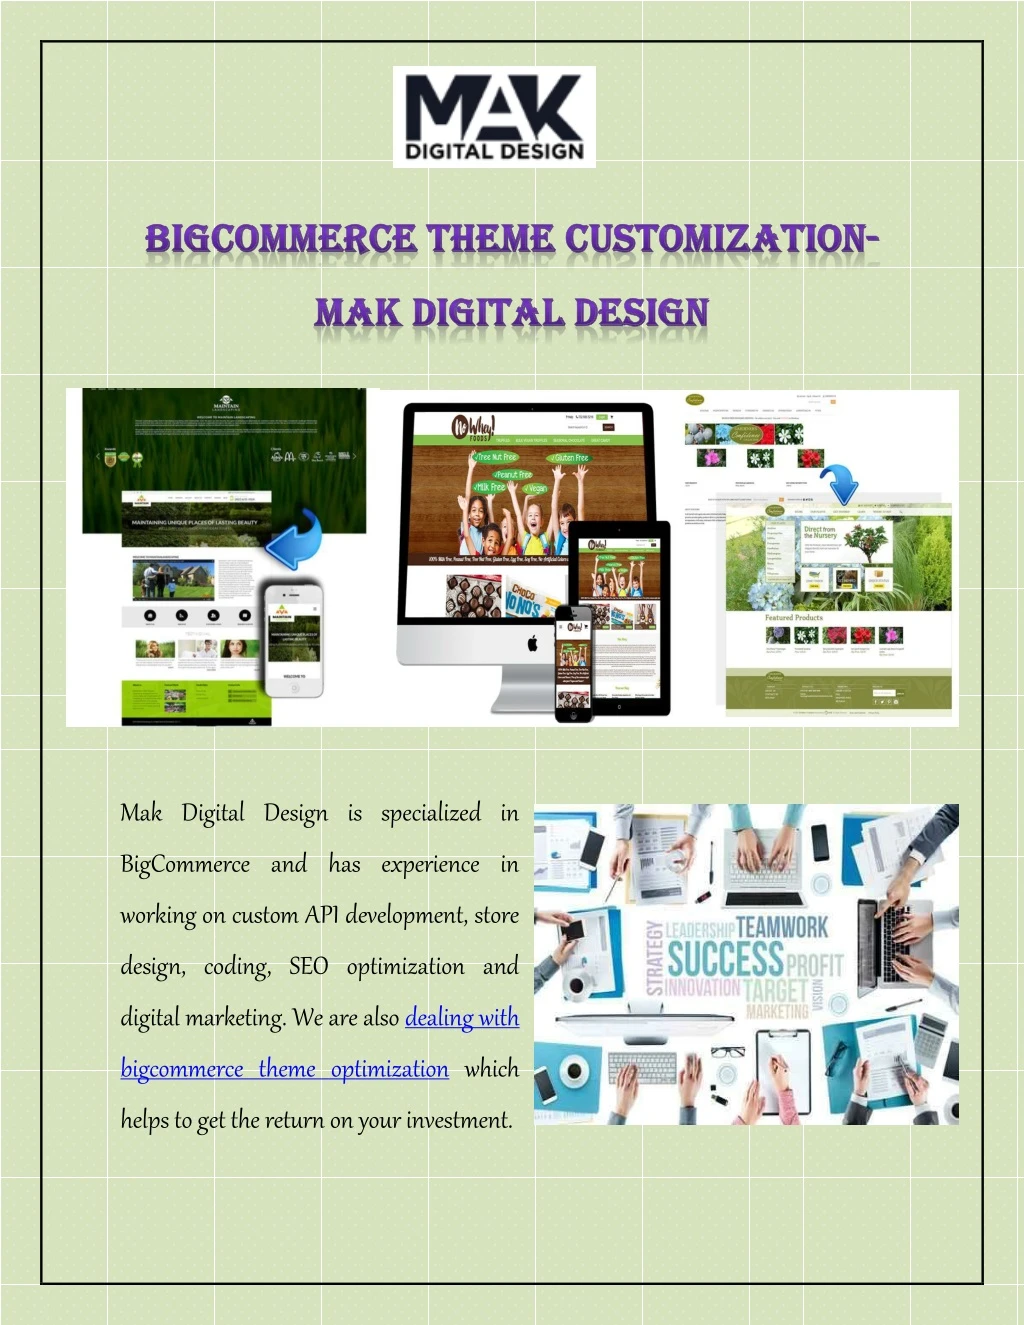 mak digital design is specialized in